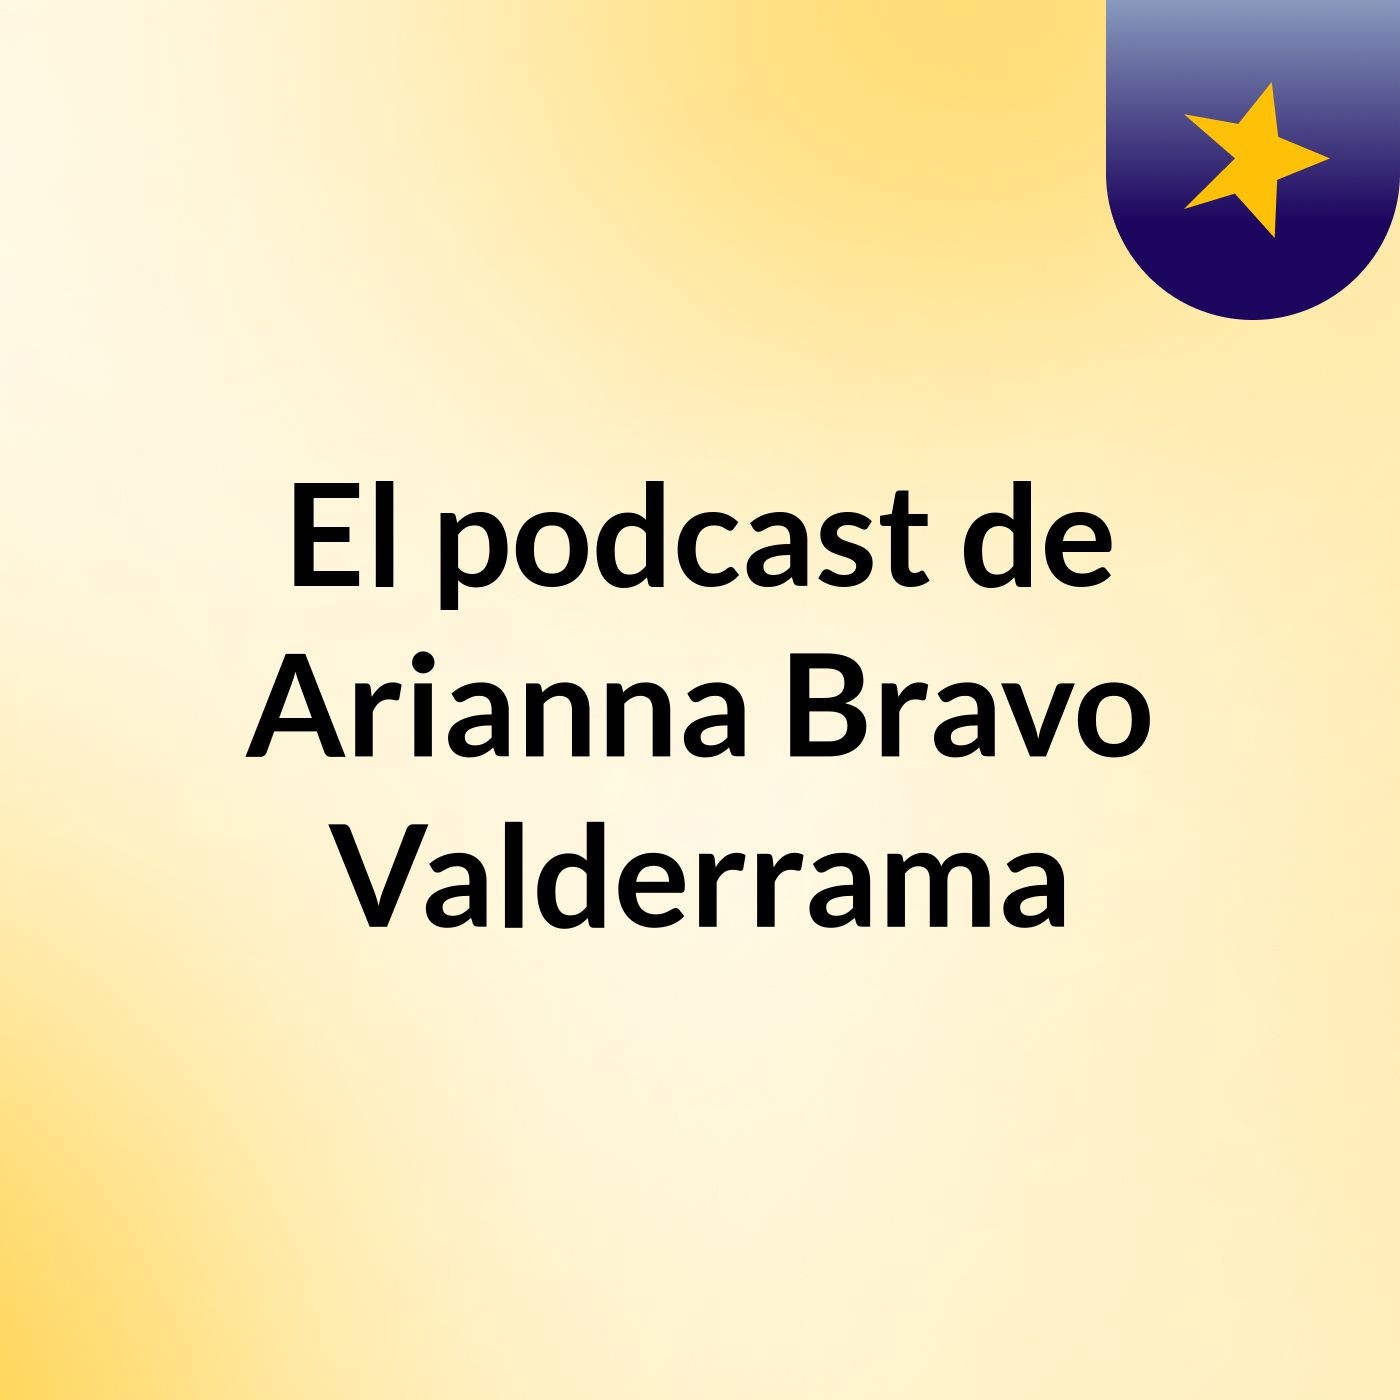 El podcast de Arianna Bravo Valderrama